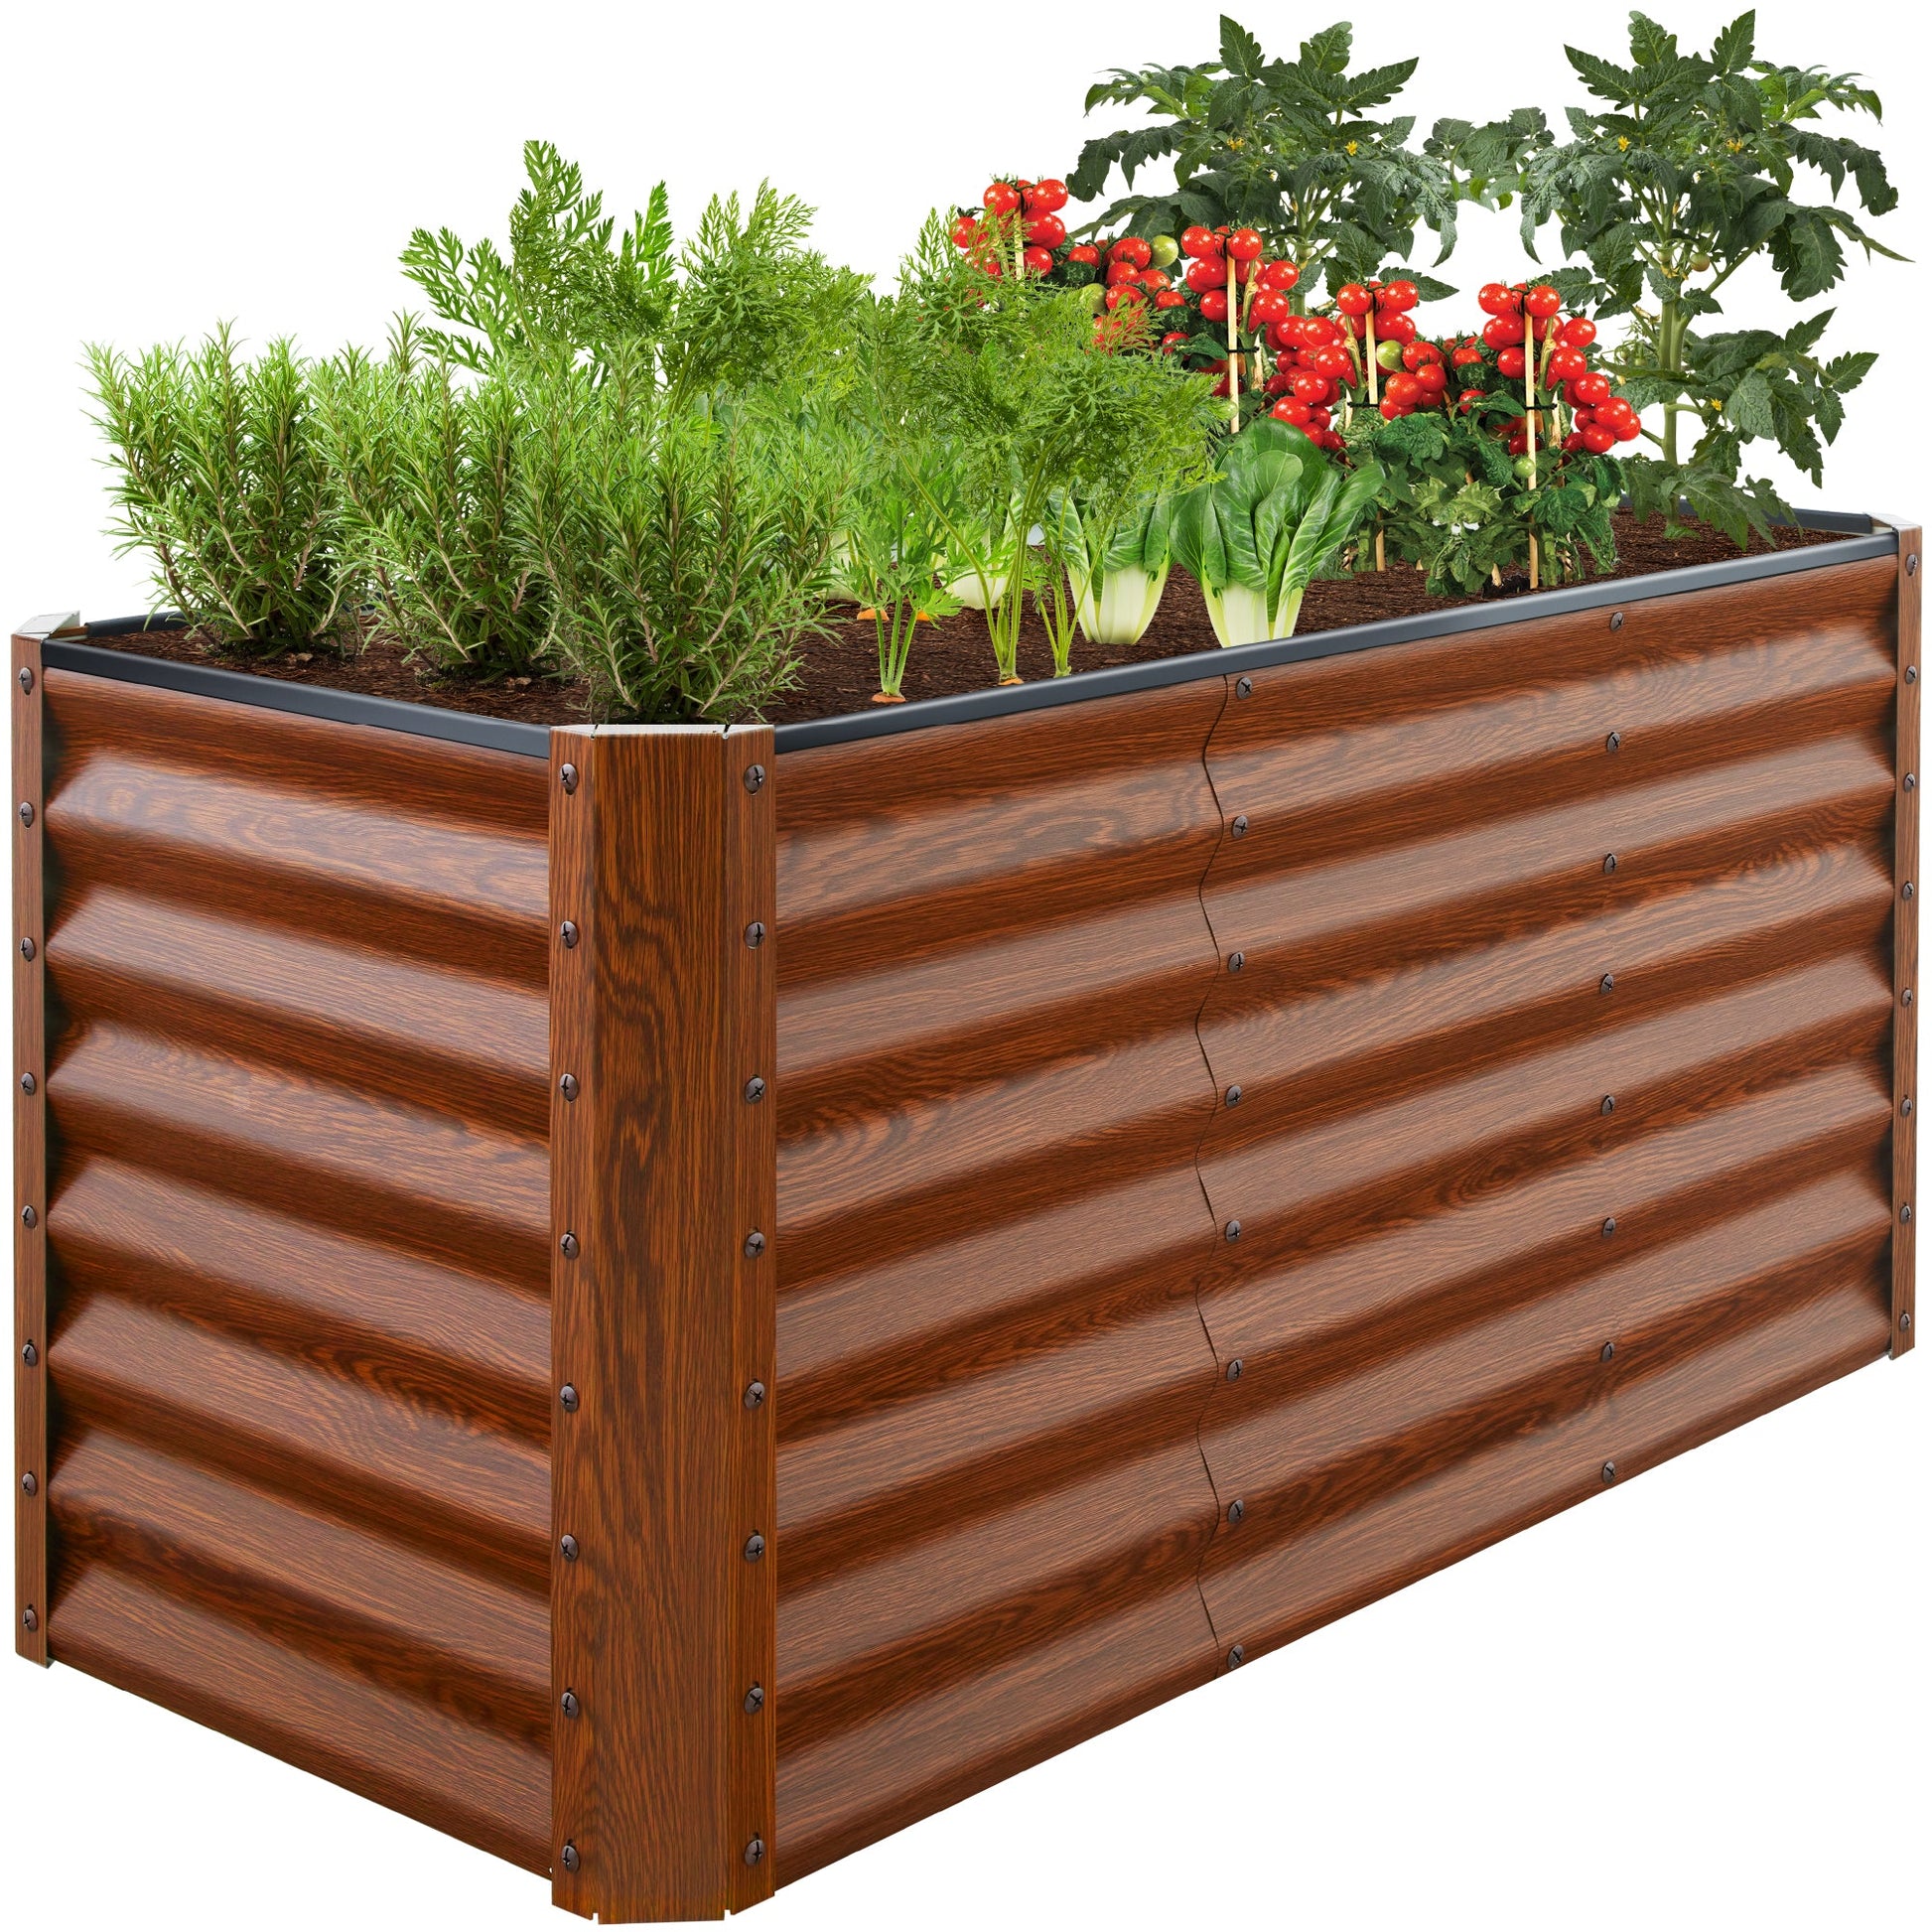 Outdoor Metal Raised Garden Bed for Vegetables, Flowers, Herbs - 4x2x2ft